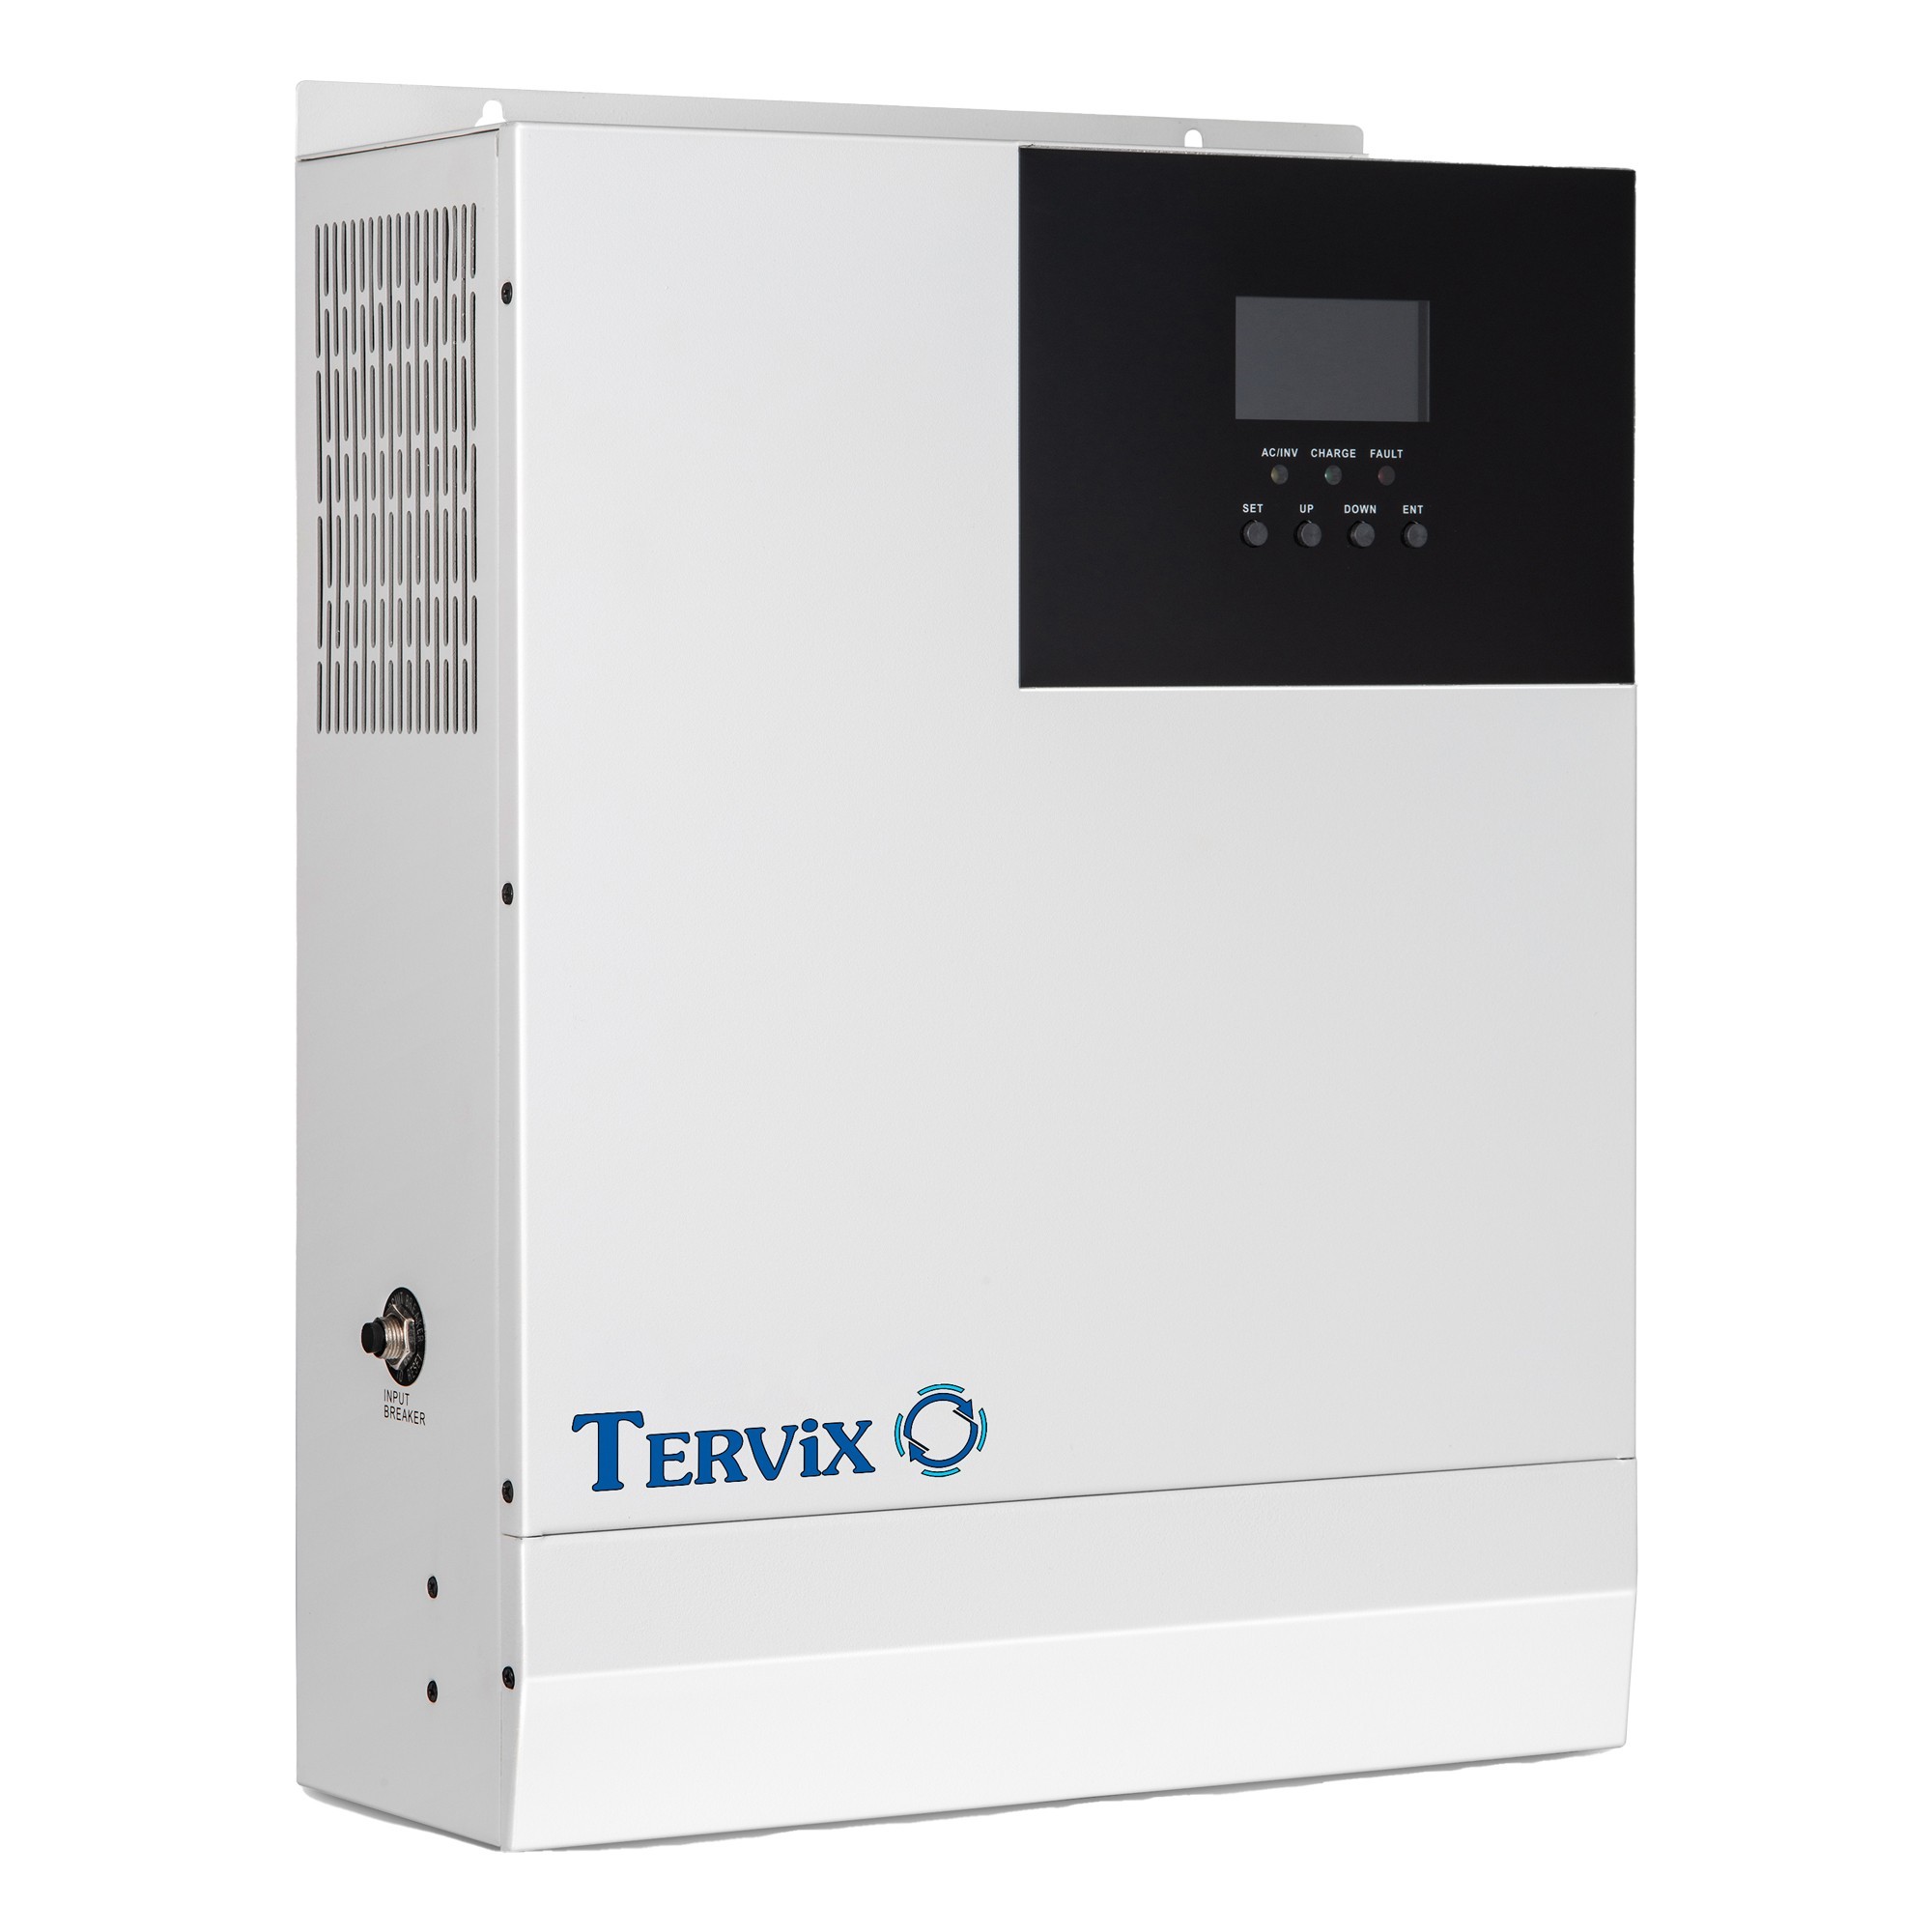 Система автономного питания Tervix BANKA 10,2 кВтч - инвертор 5кВт + аккумулятор 51,2В 100 Ач (2 шт) 693620 цена 188000 грн - фотография 2